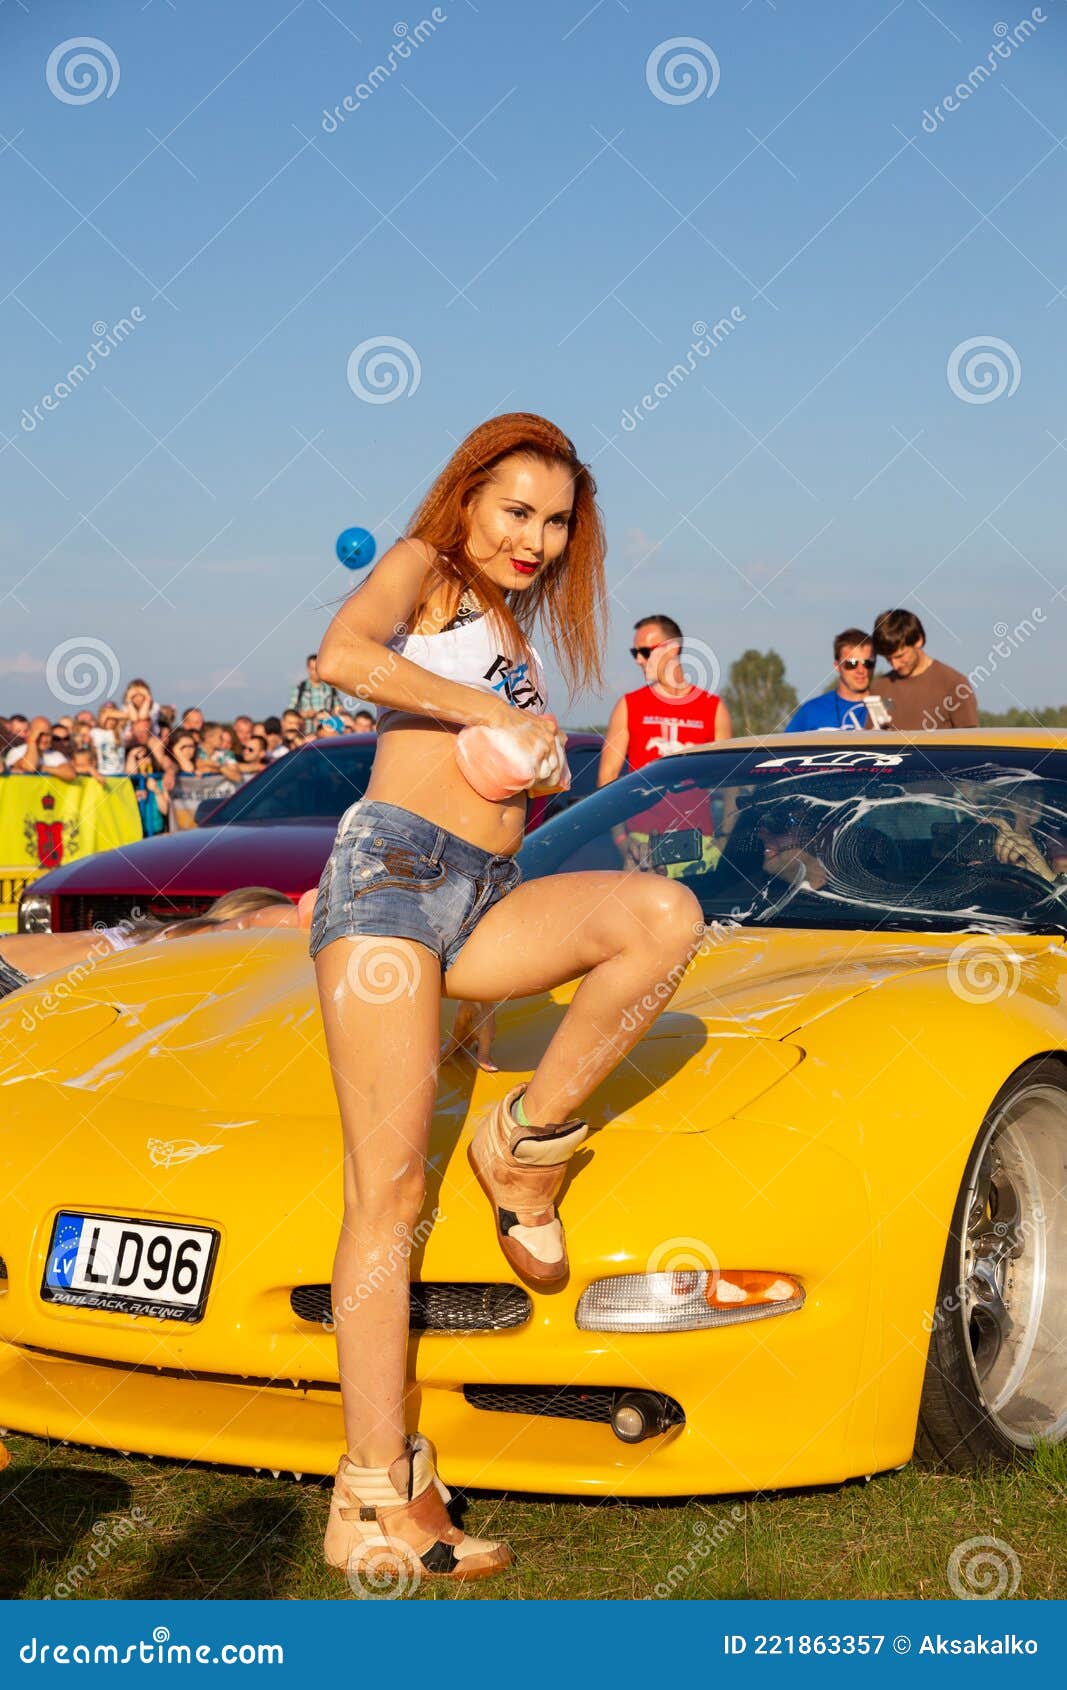 nake girls with race cars nude photo